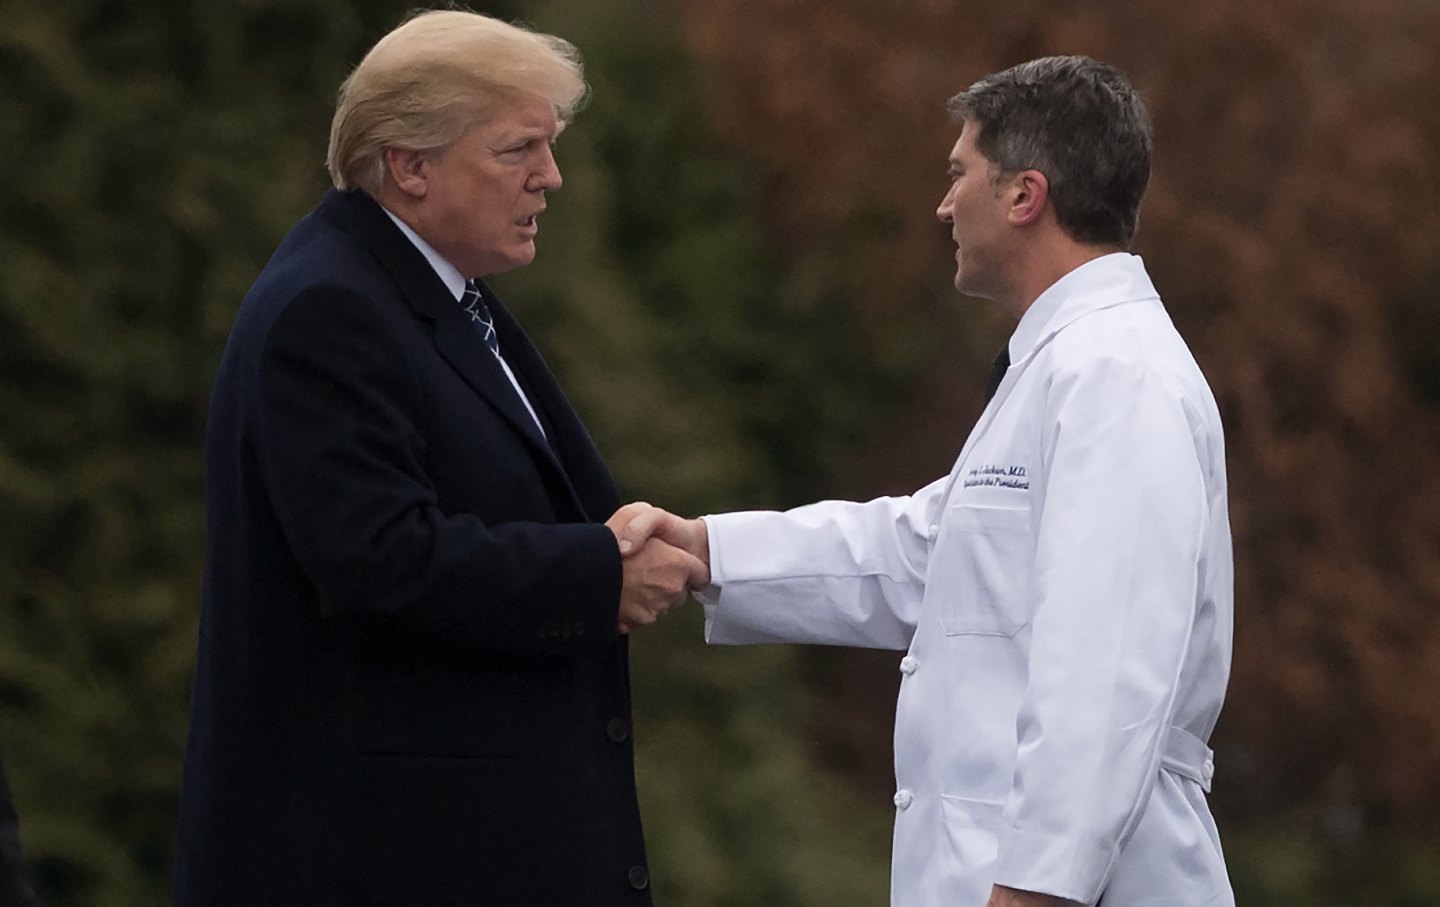 Trump shakes doctor's hand